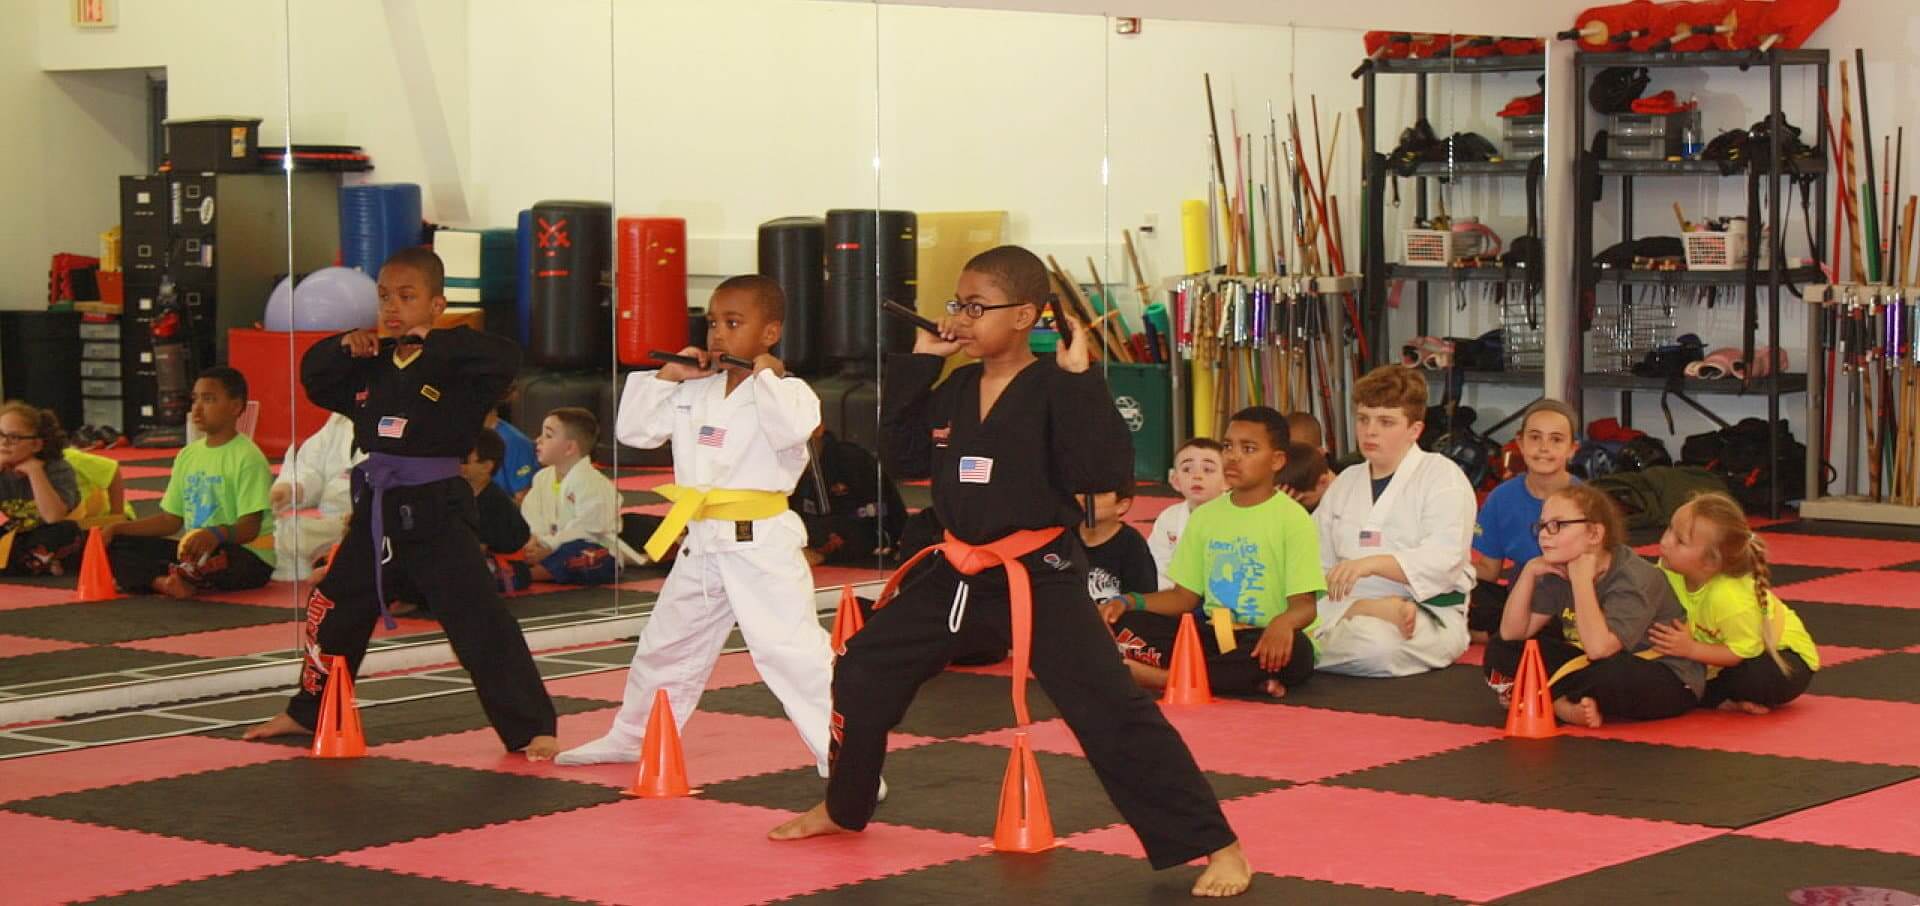 little children karate stances in the dojo